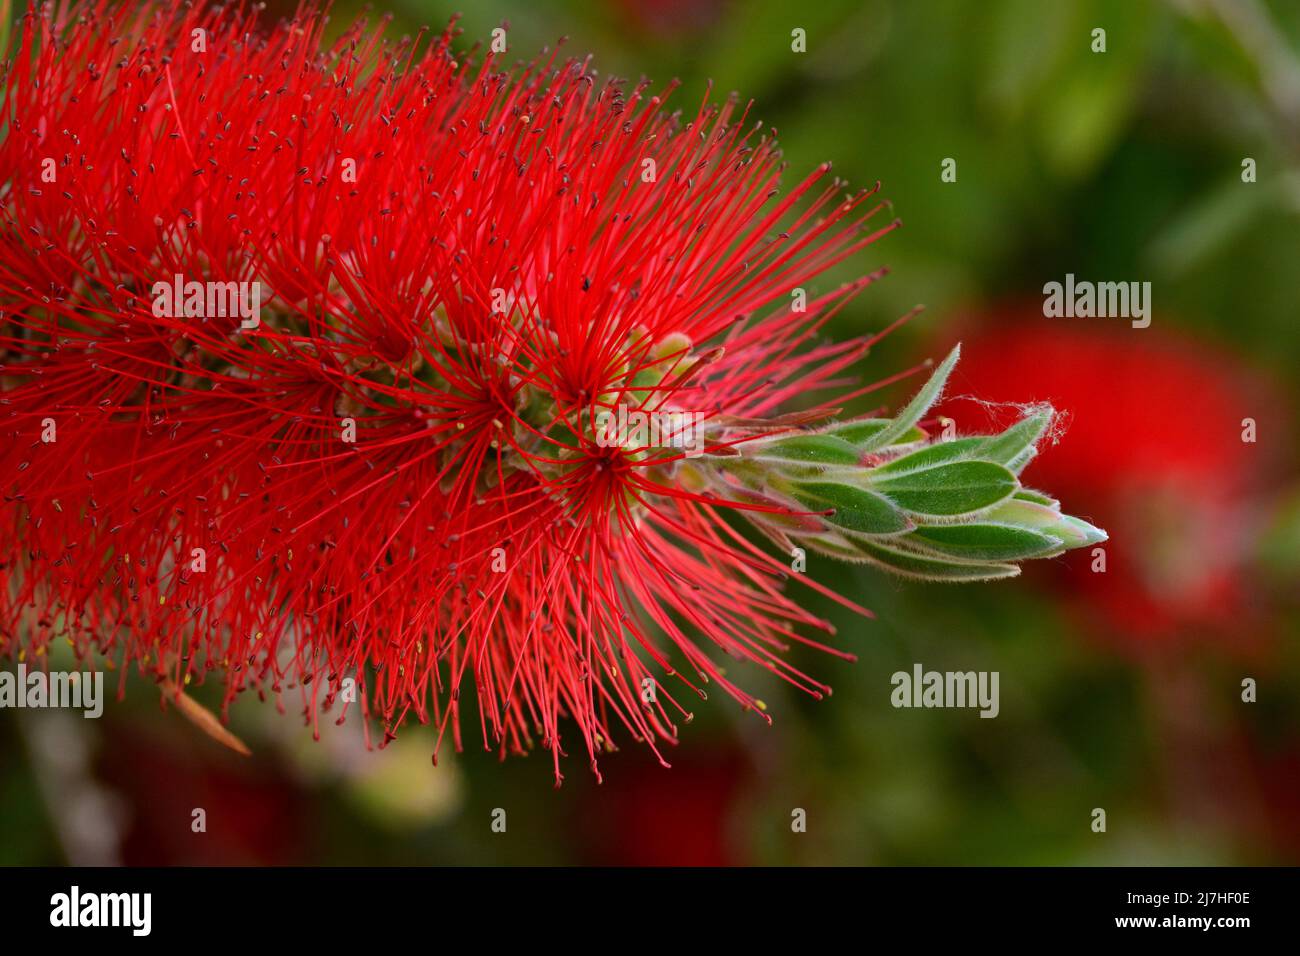 Detalle de la flor del árbol del cepillo, Callistemon citrinus, en primavera Stock Photo